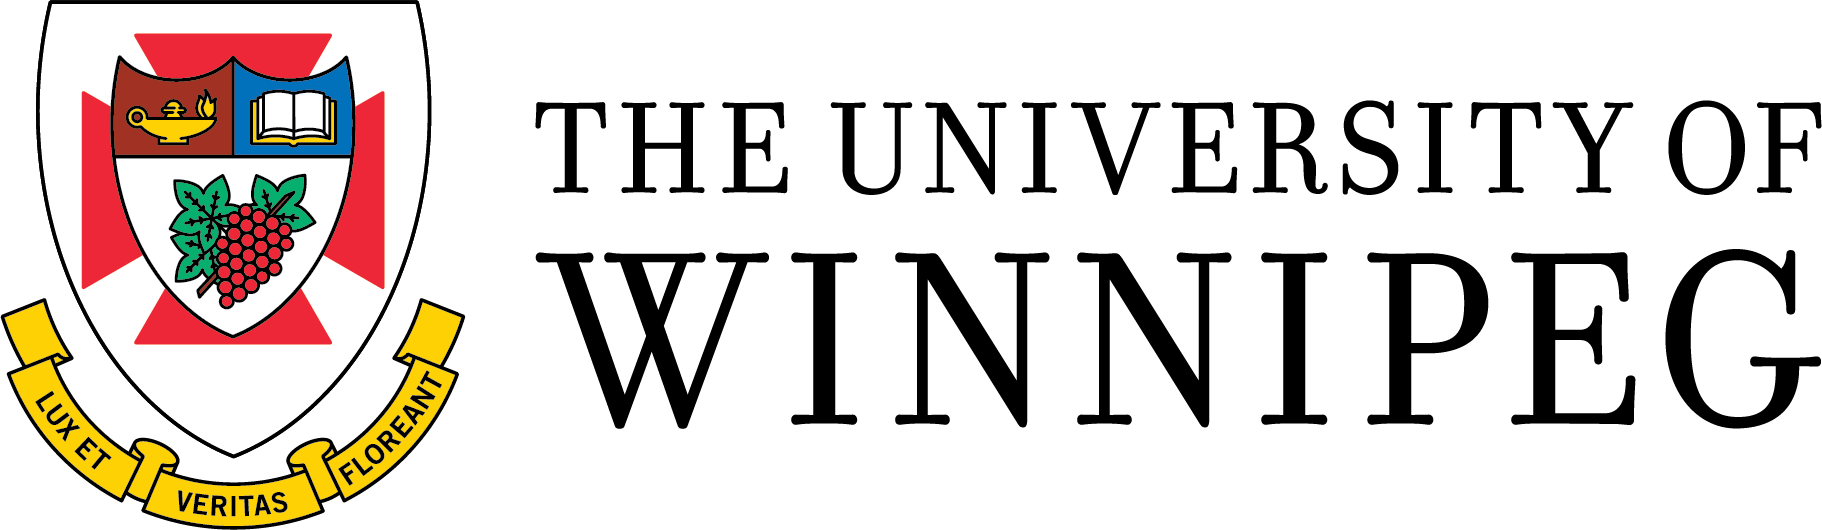 UW Logo - Logos. Branding. The University of Winnipeg